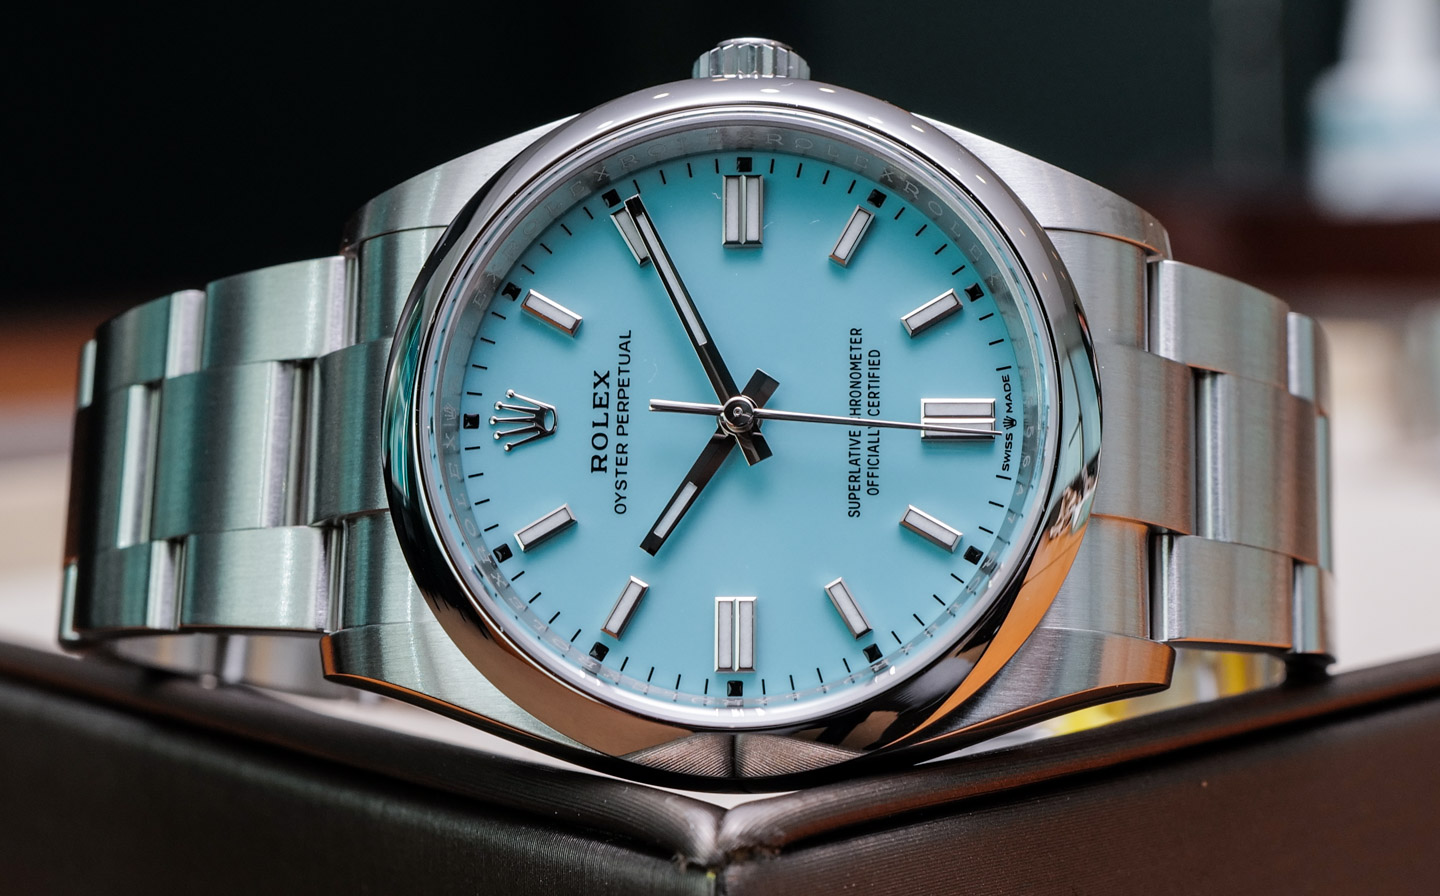 Rolex-Oyster-Perpetual-36-126000-watch-9.jpg